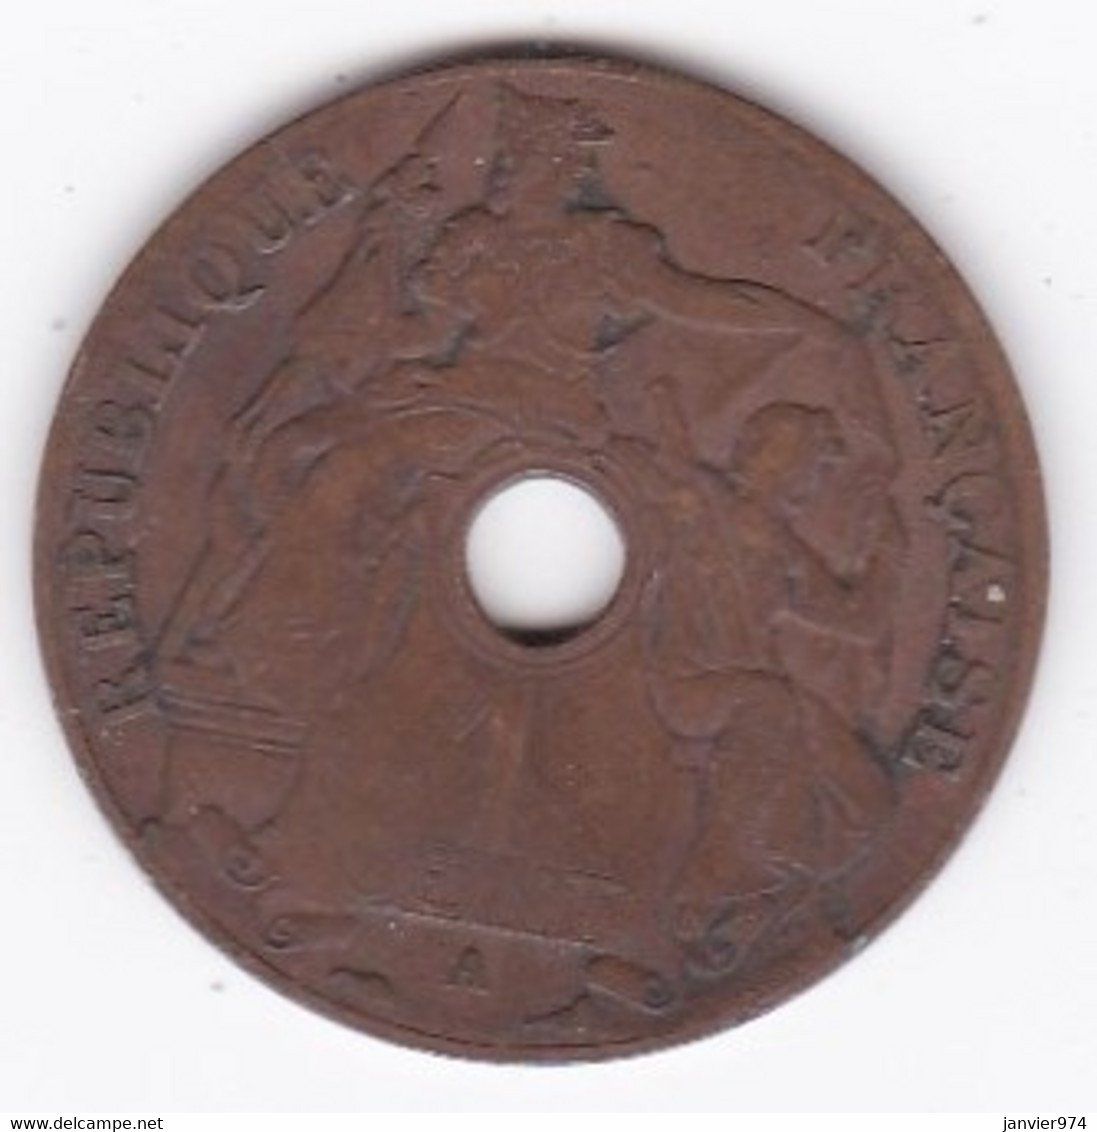 Indochine Française 1 Cent 1911 A Paris, Bronze , Lec 72 - Indocina Francese